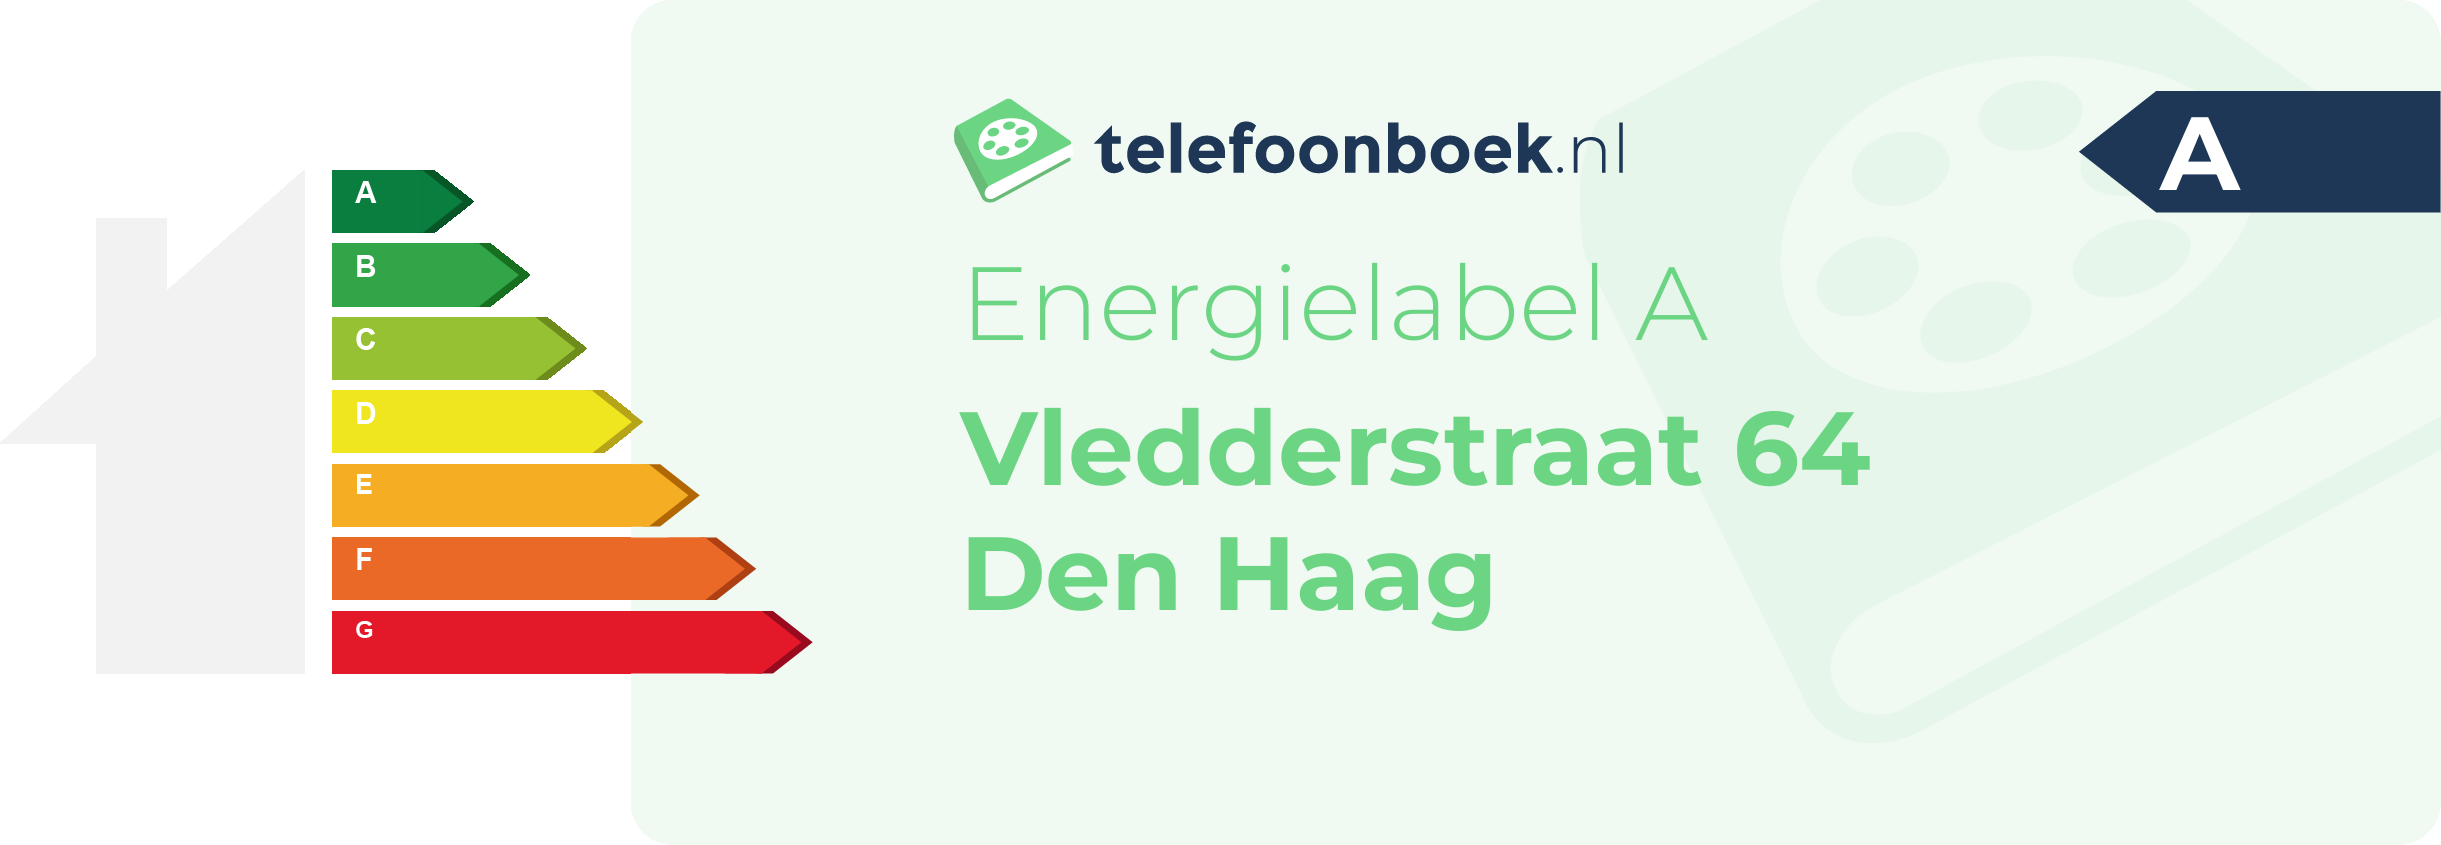 Energielabel Vledderstraat 64 Den Haag